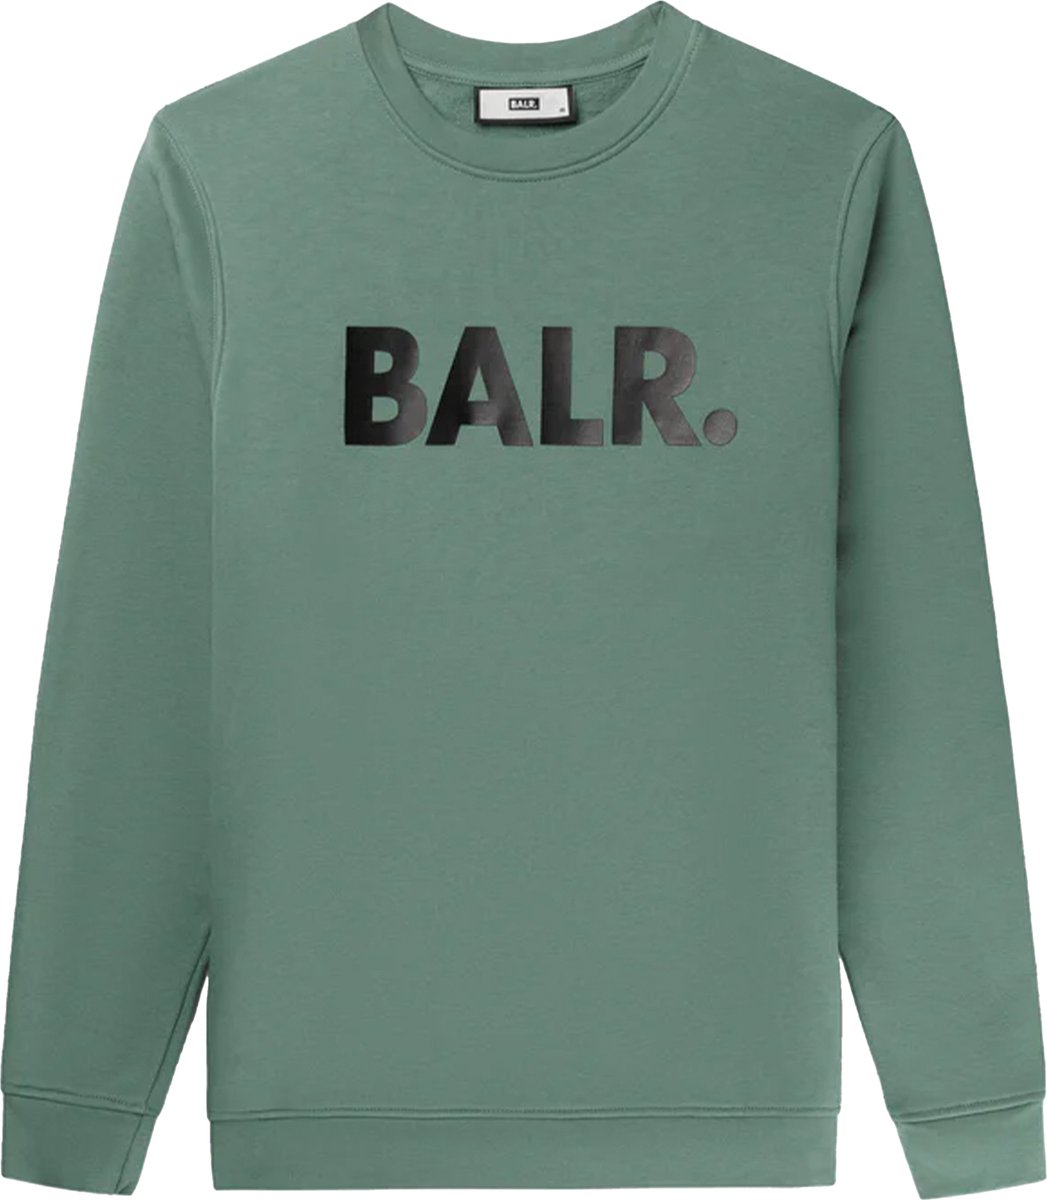 BALR. Trui Groen Katoen maat L Brand straight crewneck sweaters groen